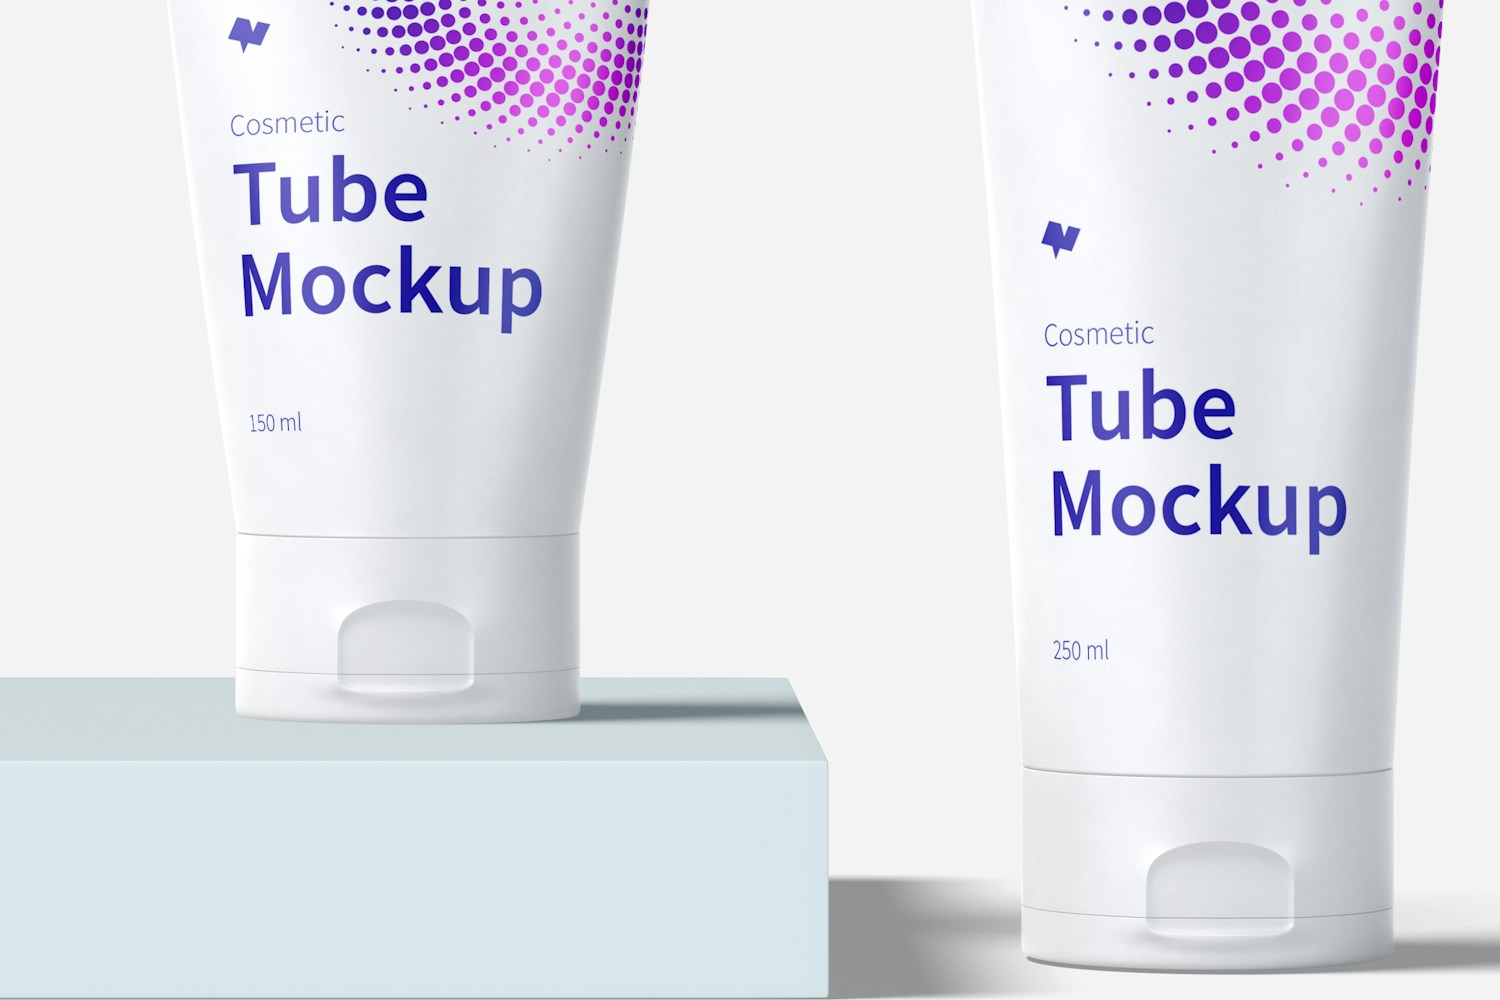 Cosmetic Tube Mockup, Two Sizes